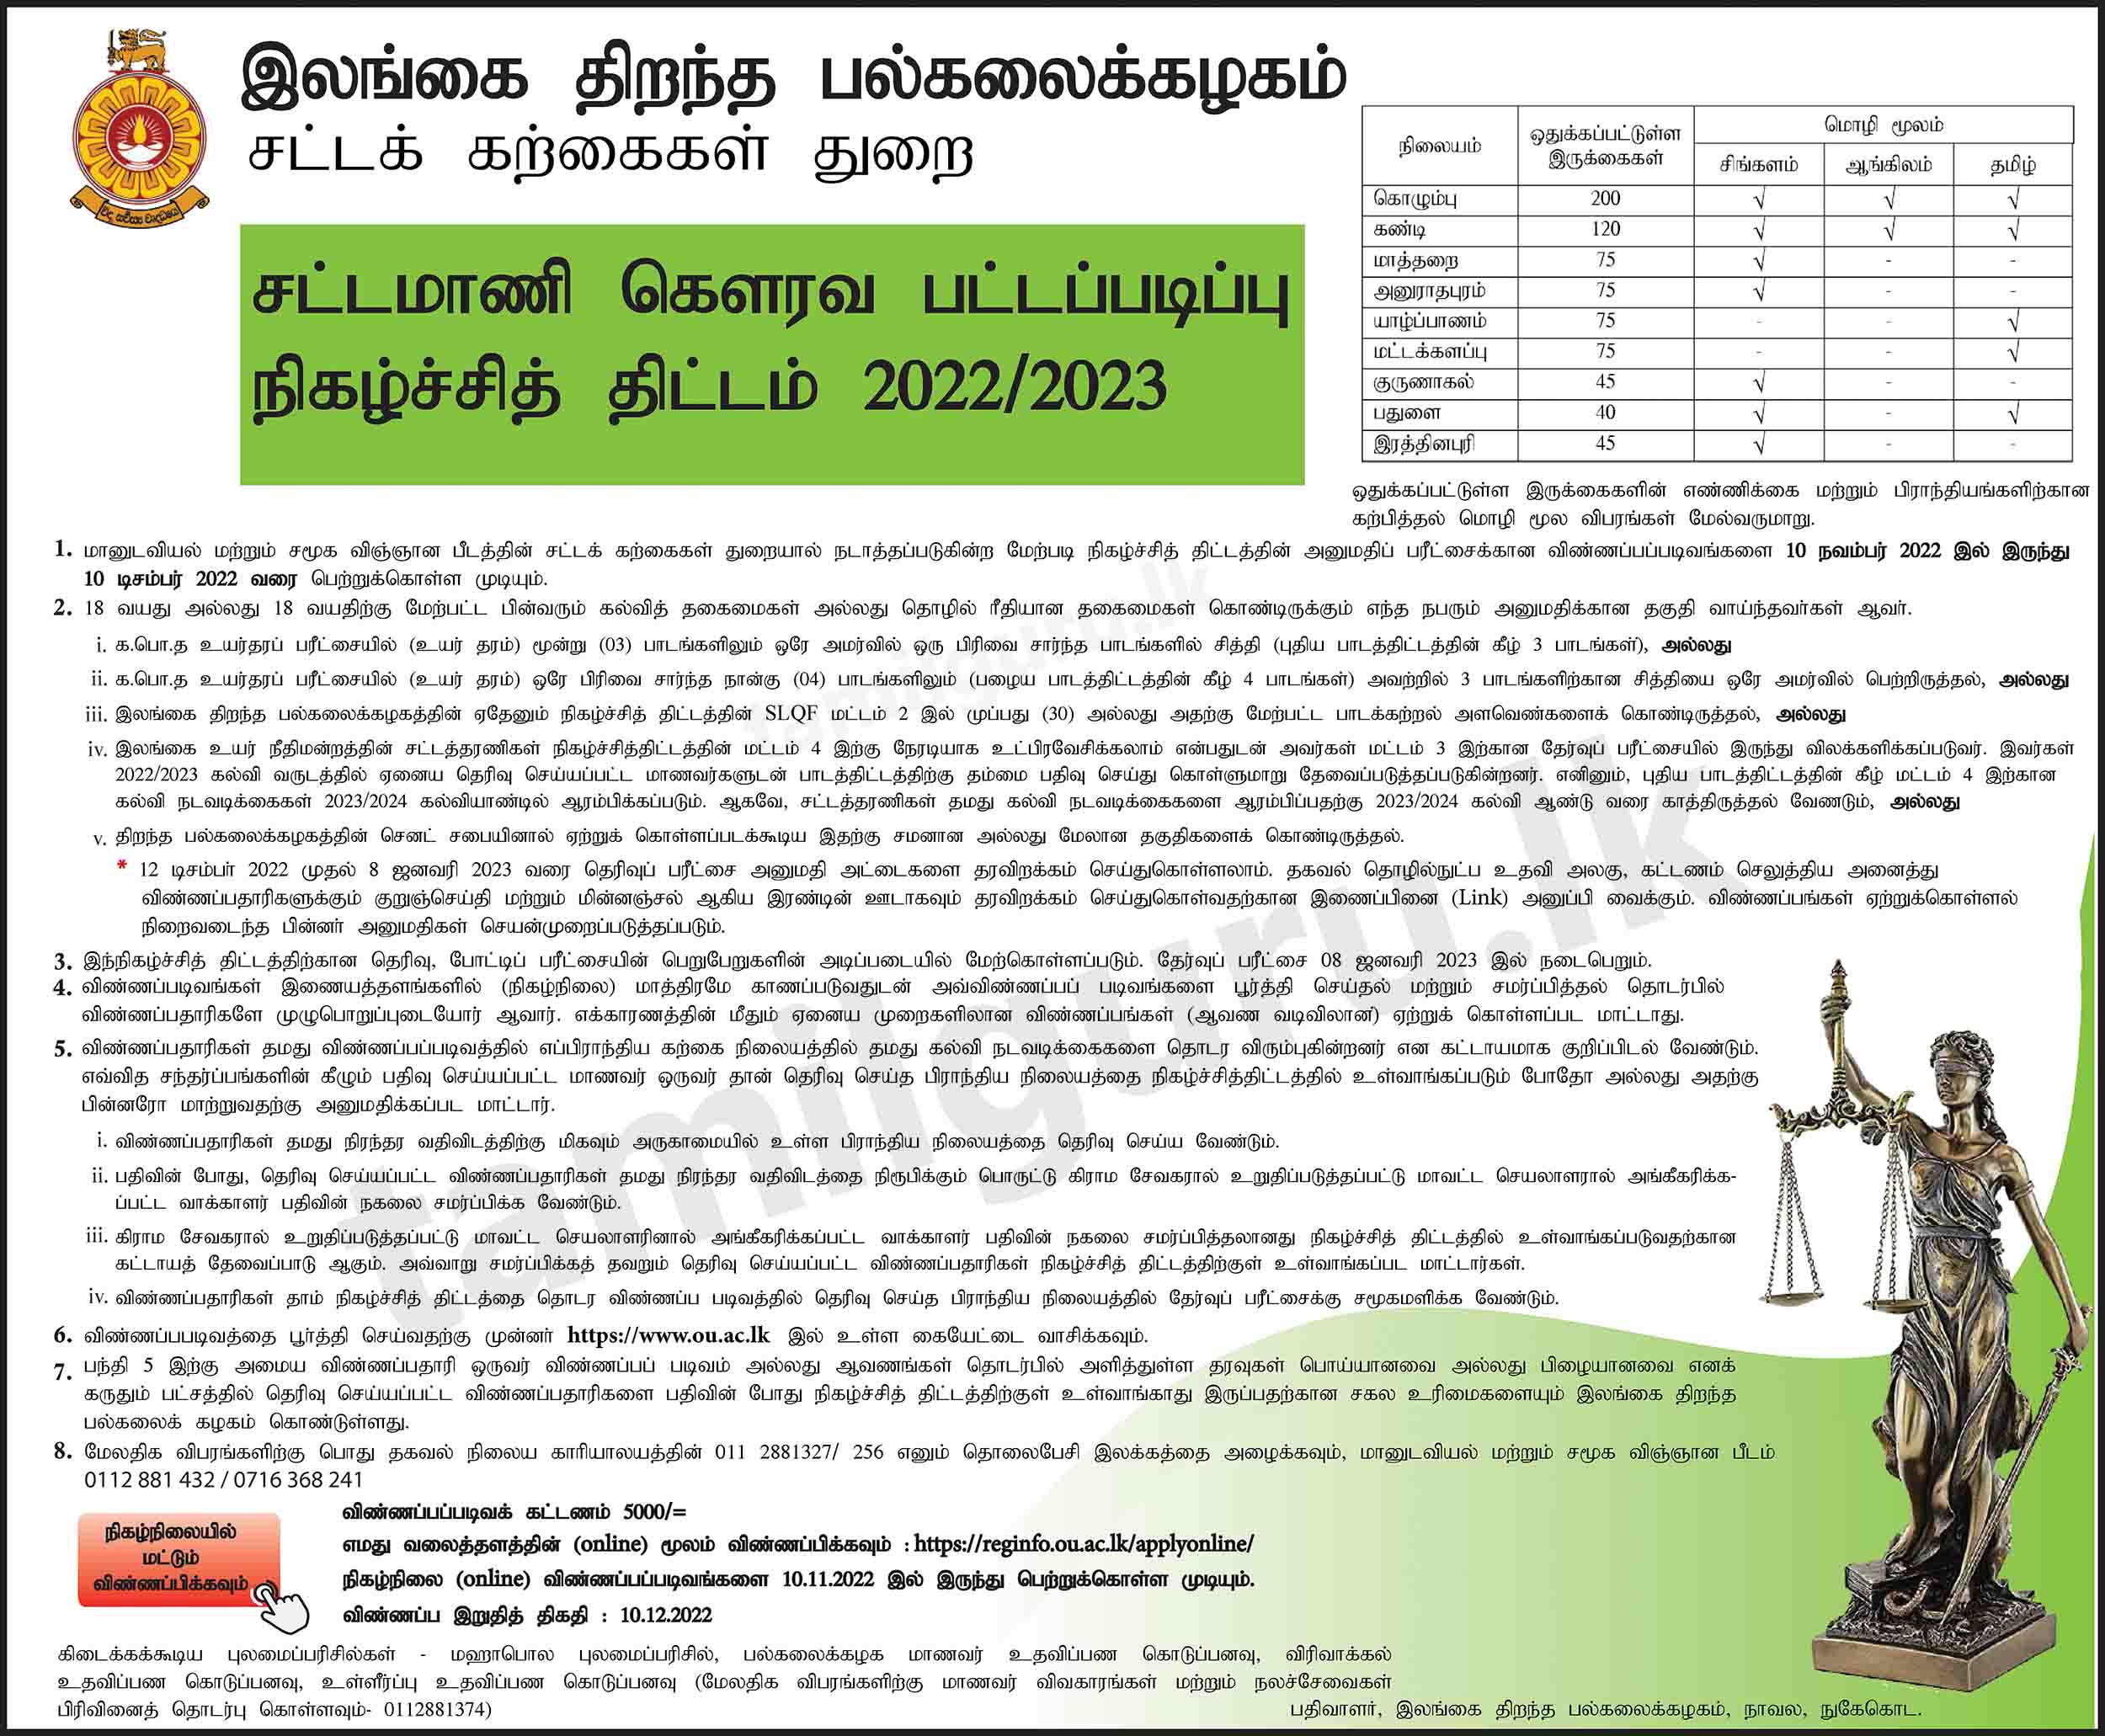 Calling Applications for Bachelor of Laws (LLB) Degree Programme (Entrance Exam) 2022/2023 - Open University of Sri Lanka (OUSL)